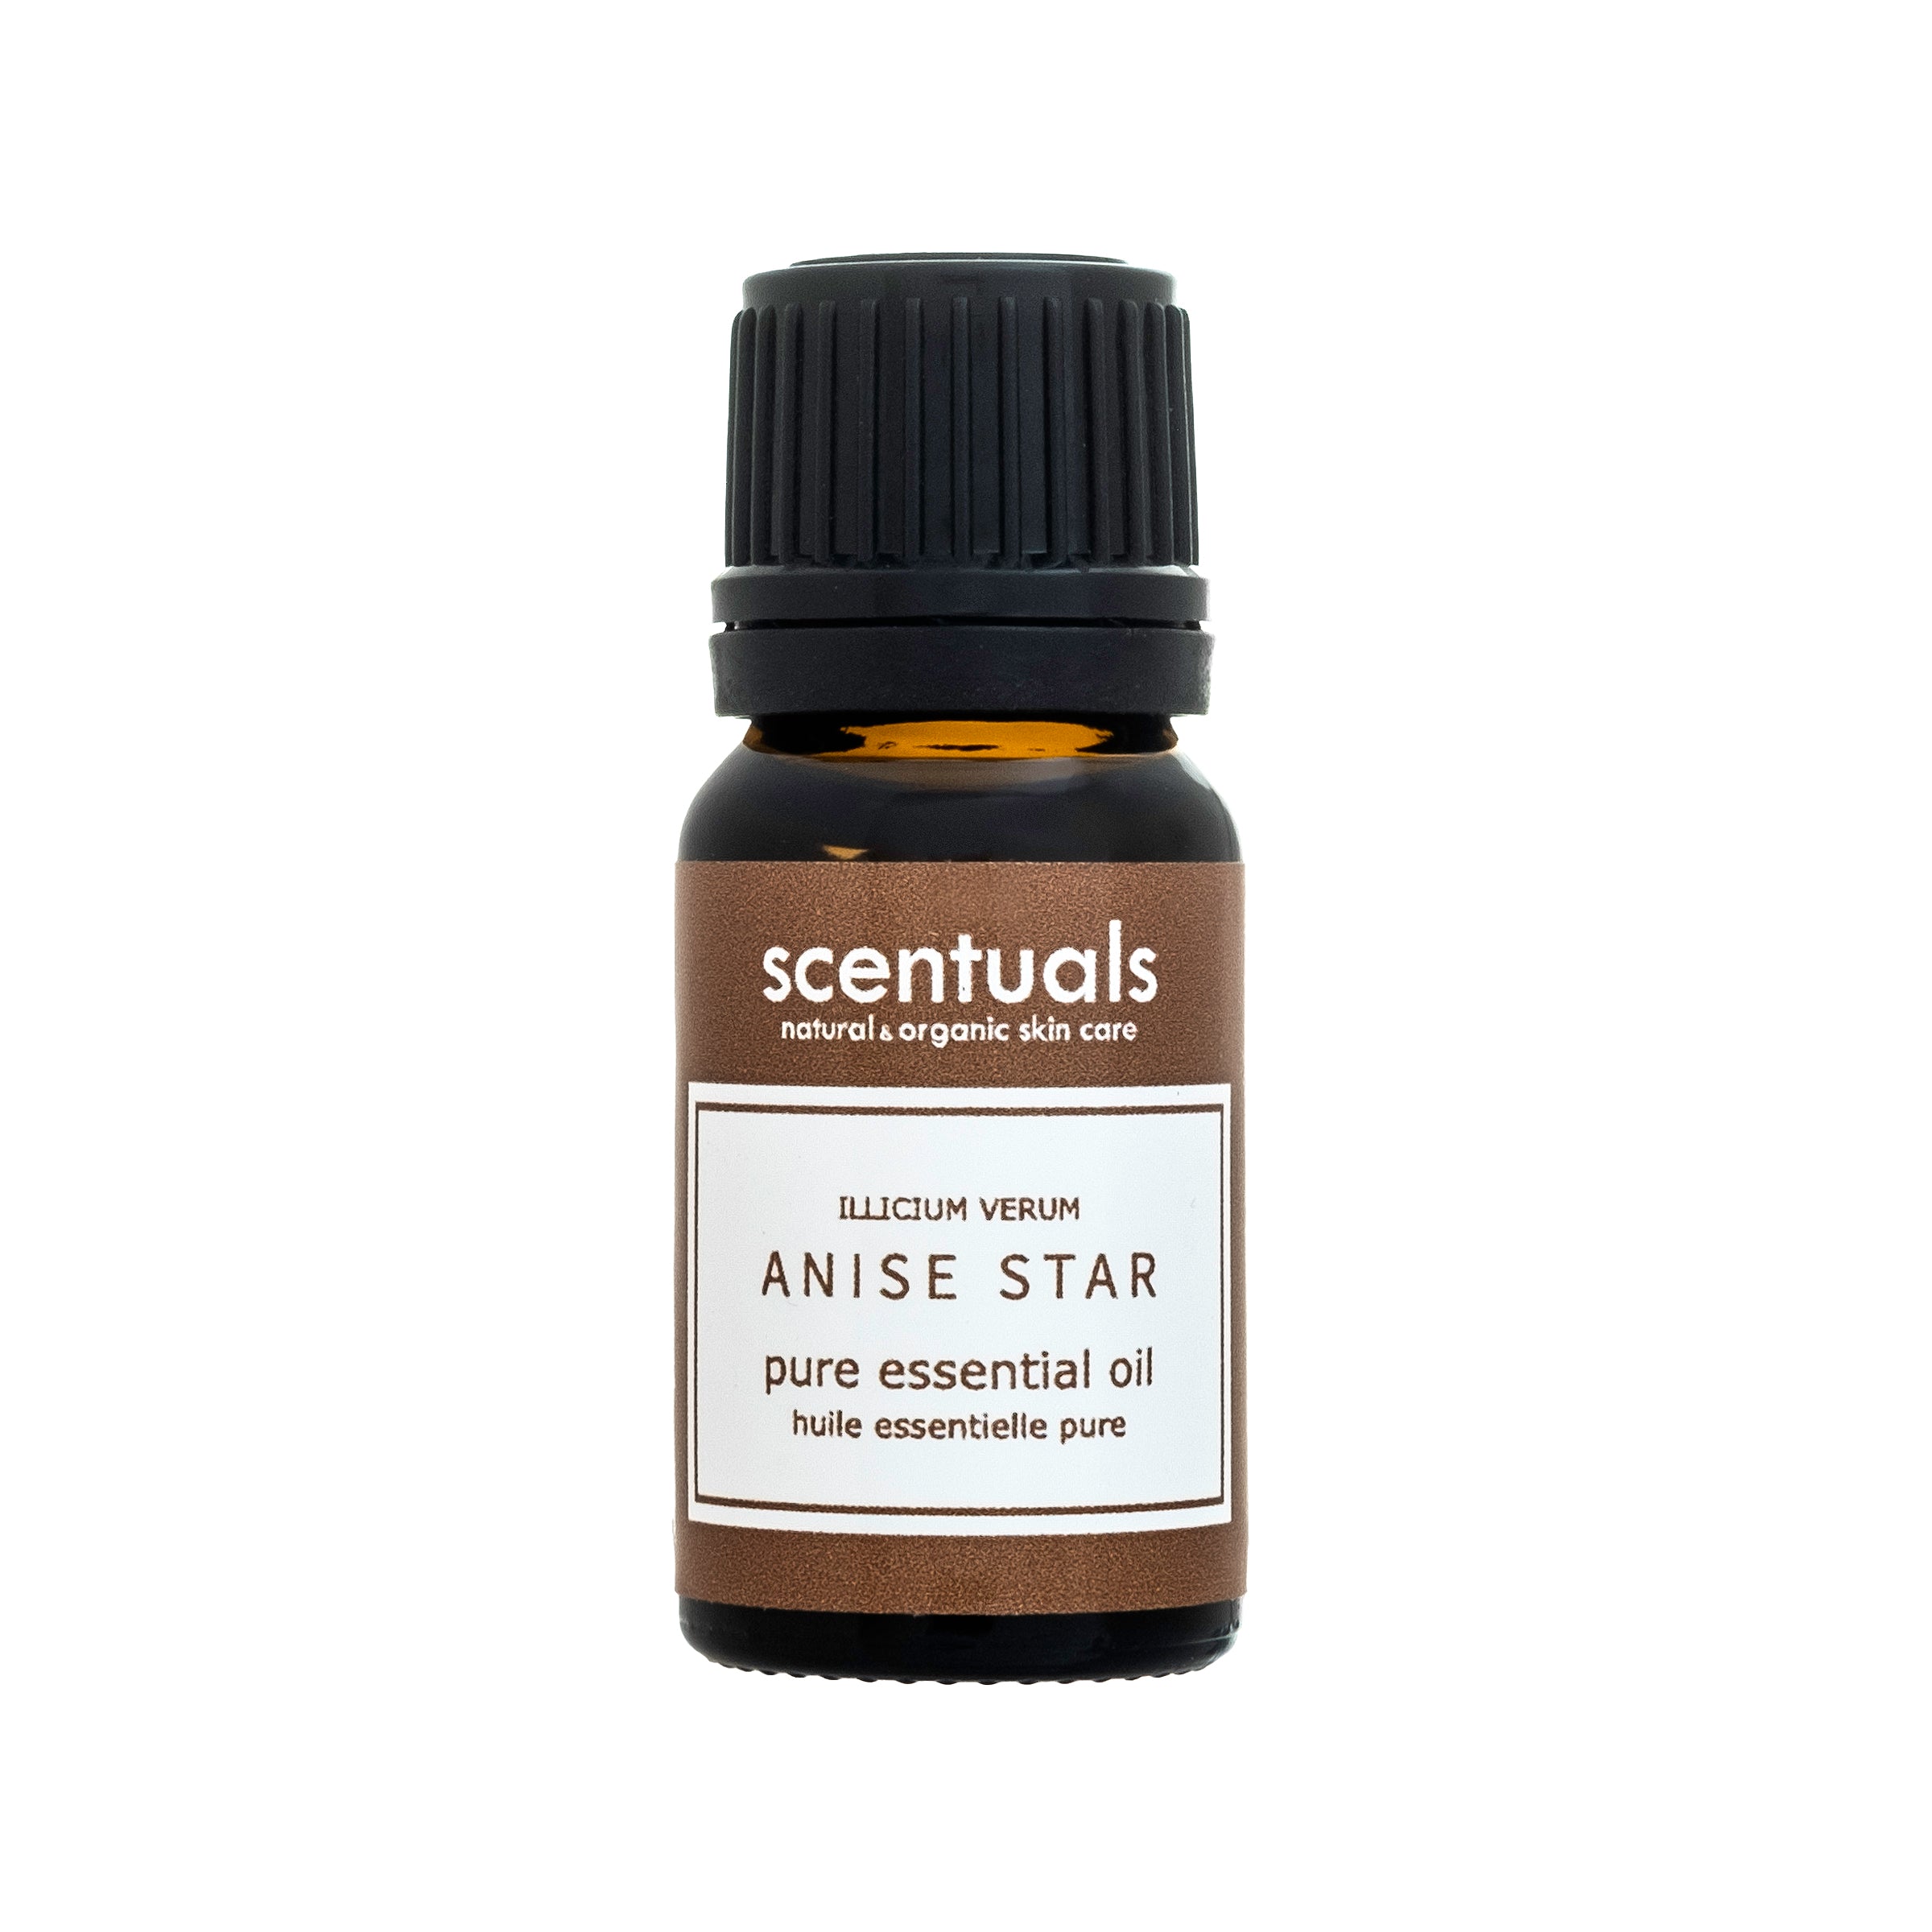 Anise Star Pure Essential Oil-ScentualsNatural_OrganicSkinCare